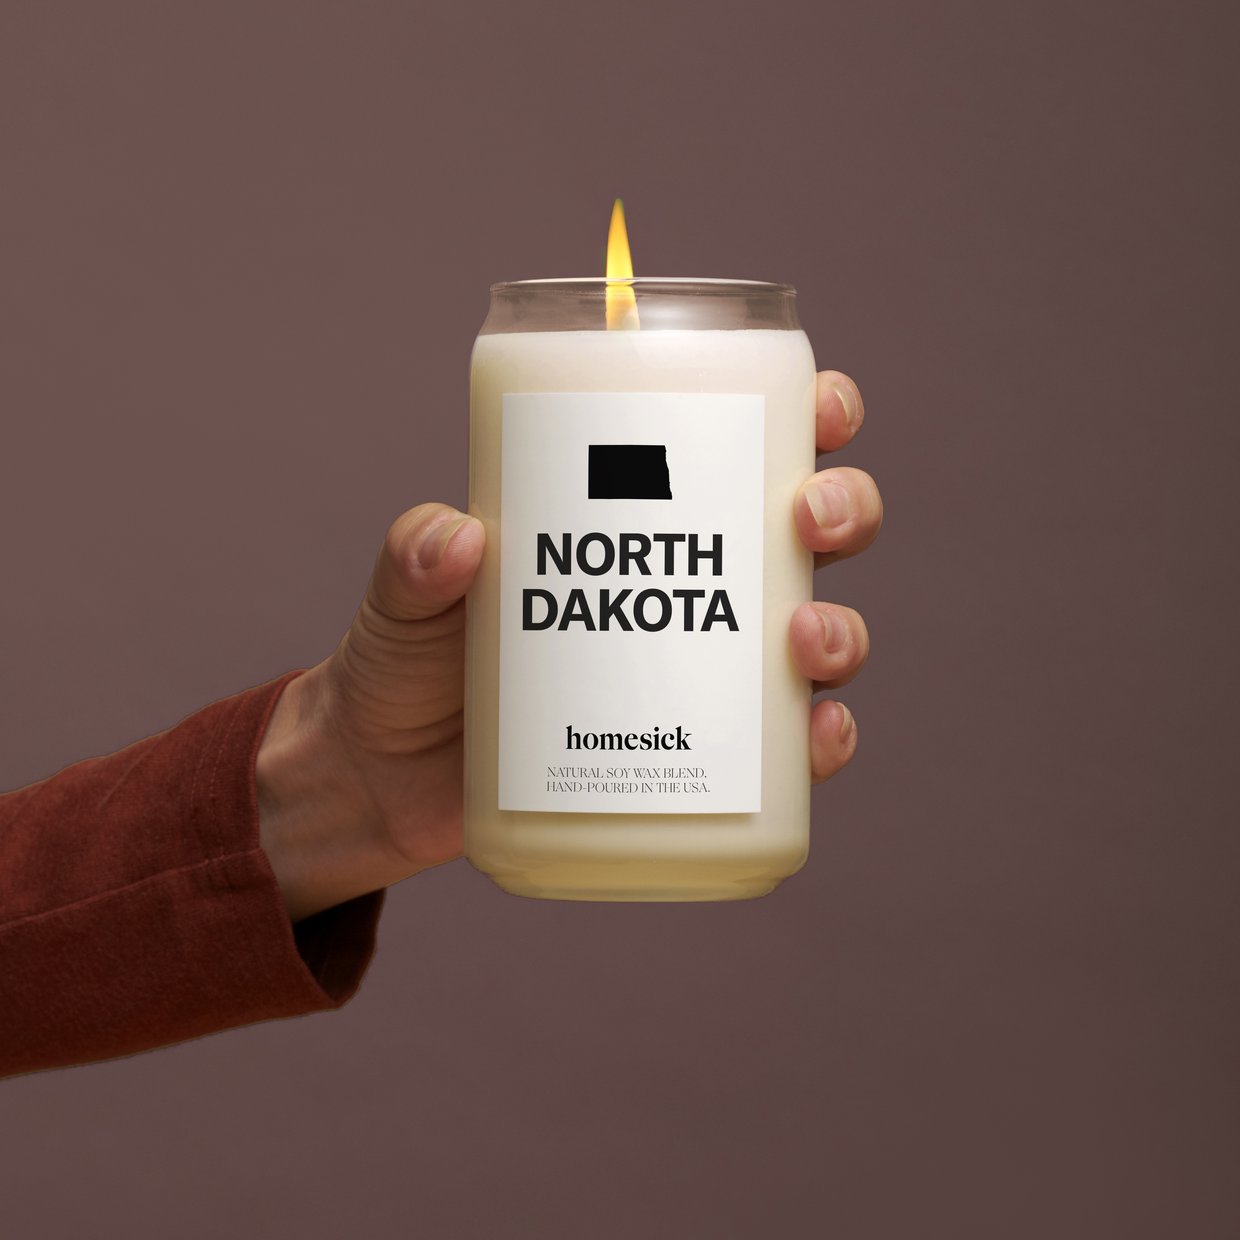 Homesick Candle - North Dakota - Proper